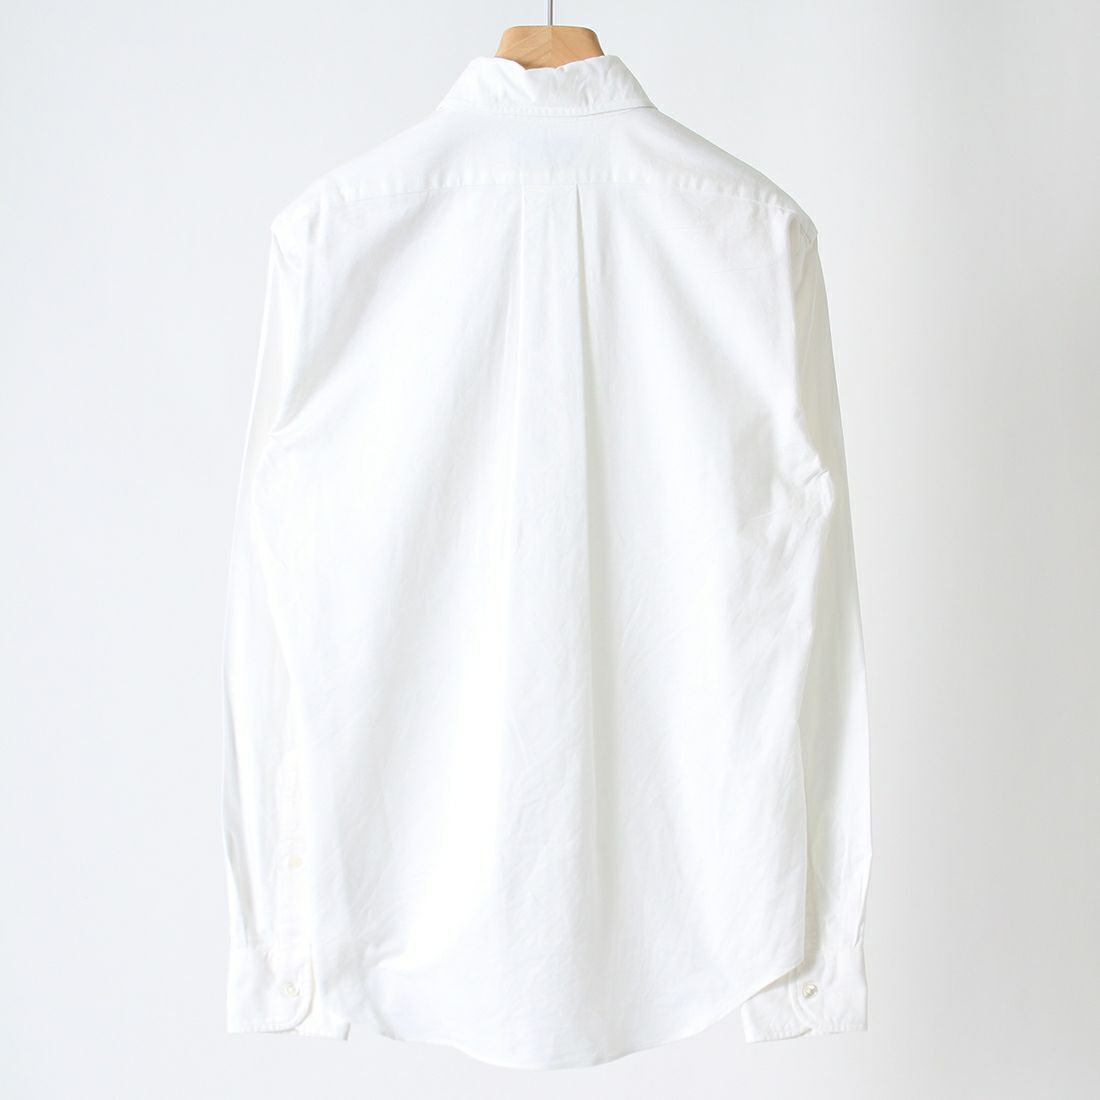 Jeans Factory Clothes [ジーンズファクトリークローズ] スーピマオックスBDシャツ [JFC-BSC-01] WHITE